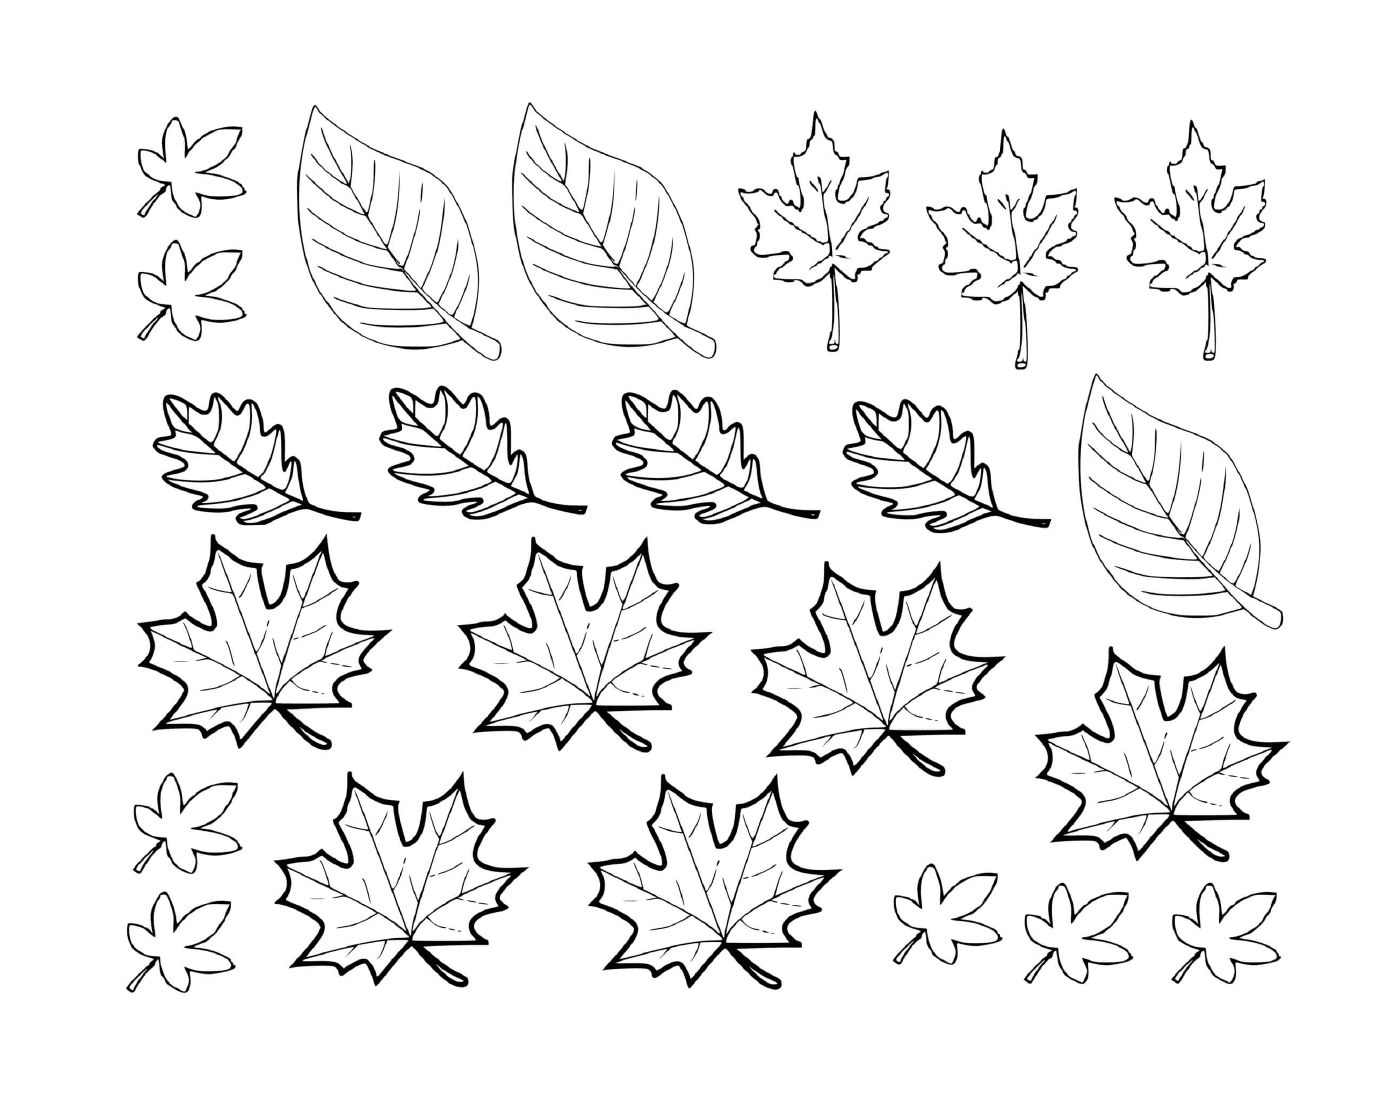 feuilles automne